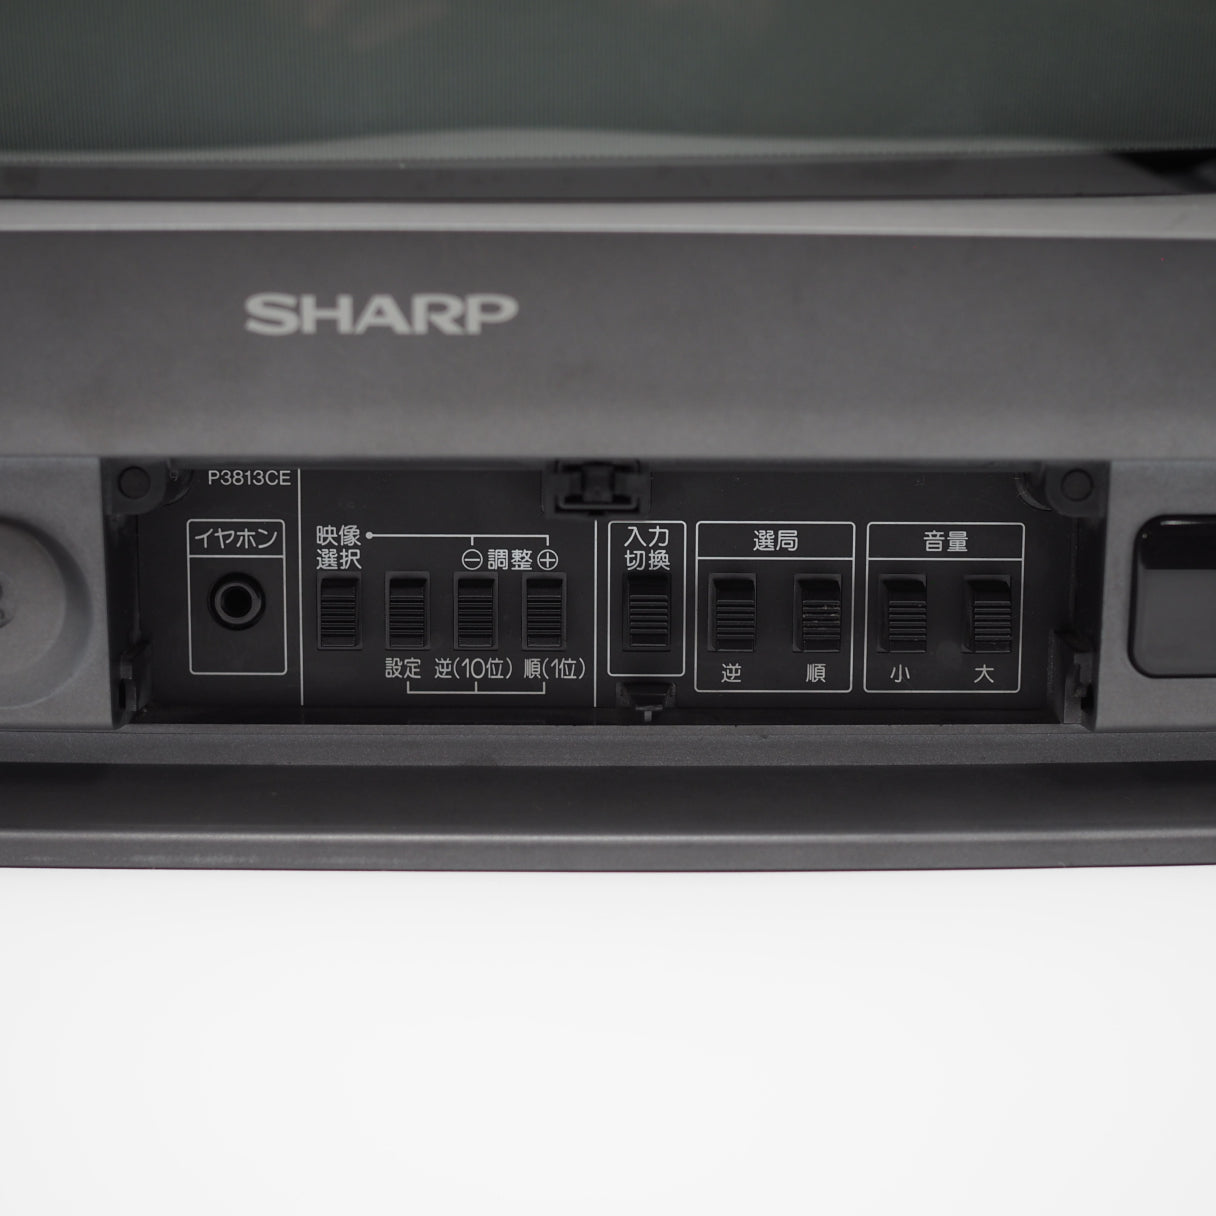 [JUNK] SHARP SF-1 Console System Super Famicom Color TV 14G-SF1